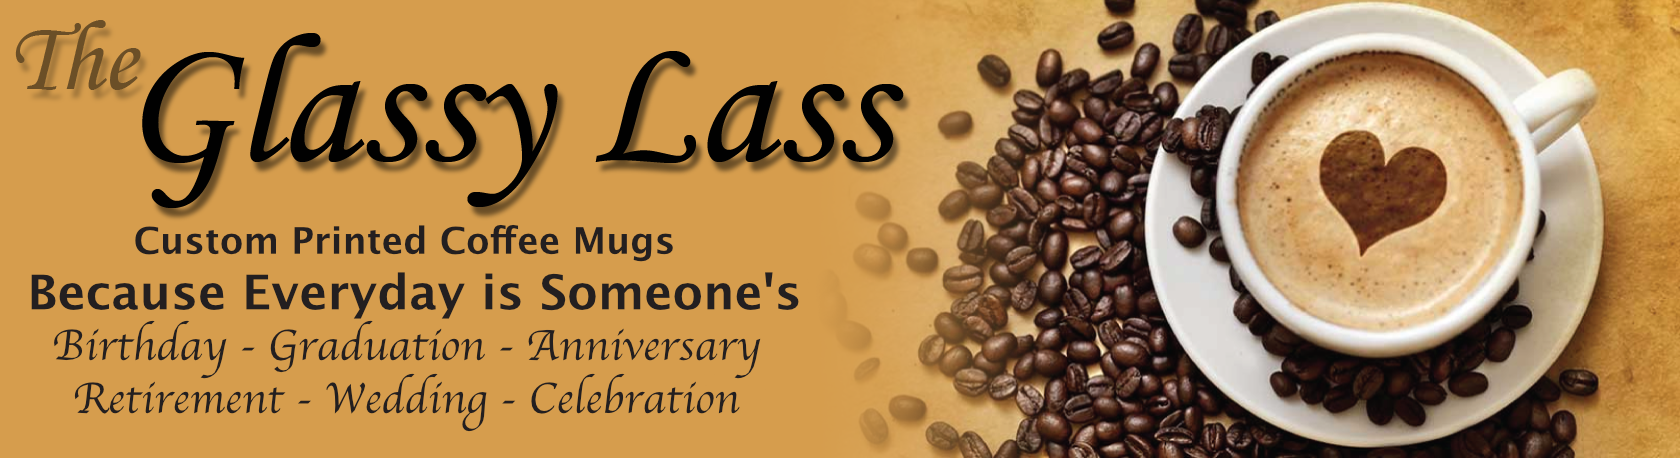 TheGlassyLass.com Custom Printed Coffee Mugs and Personal Accessories. 